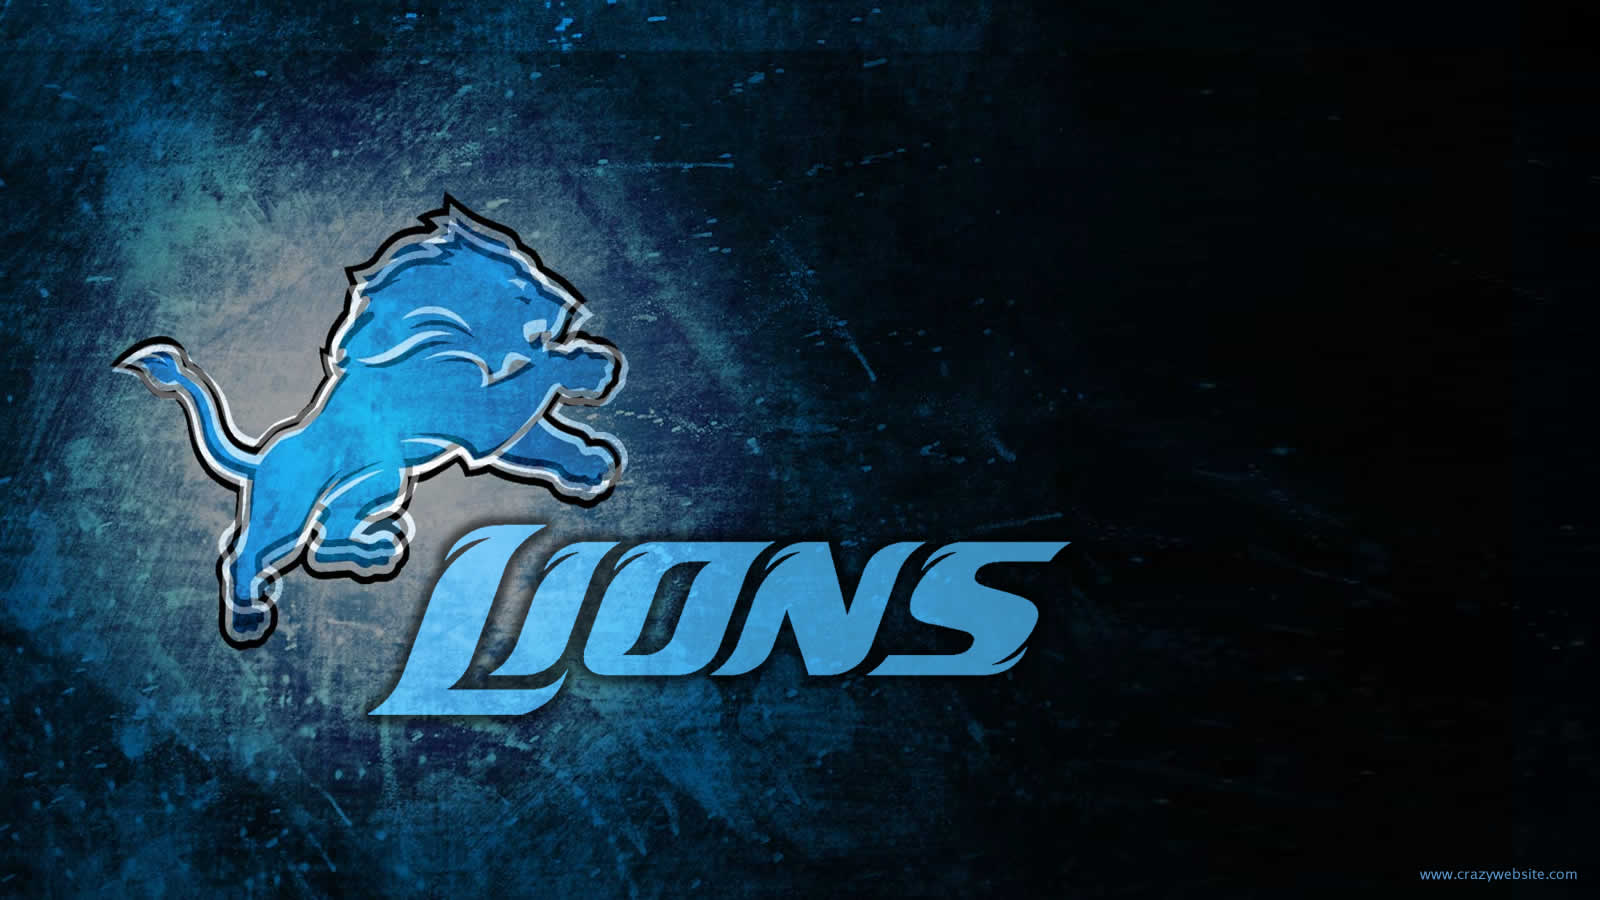 Detroit Lions Schedule At National Football League